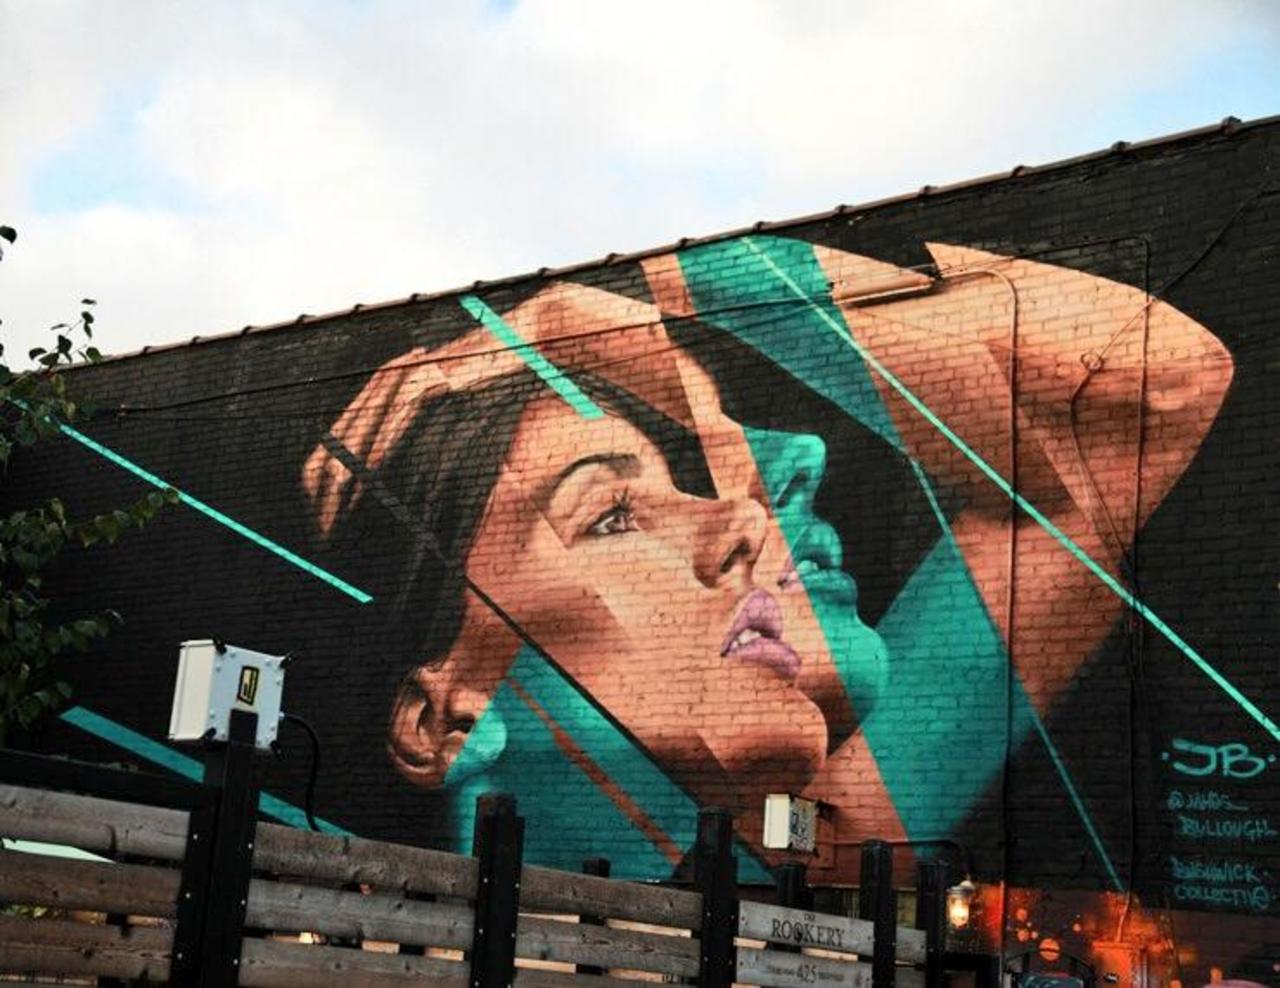 “@Pitchuskita: James Bullough
Brooklyn, NY

#streetart #Art #graffiti #mural http://t.co/tS0Wr8Bjs2”